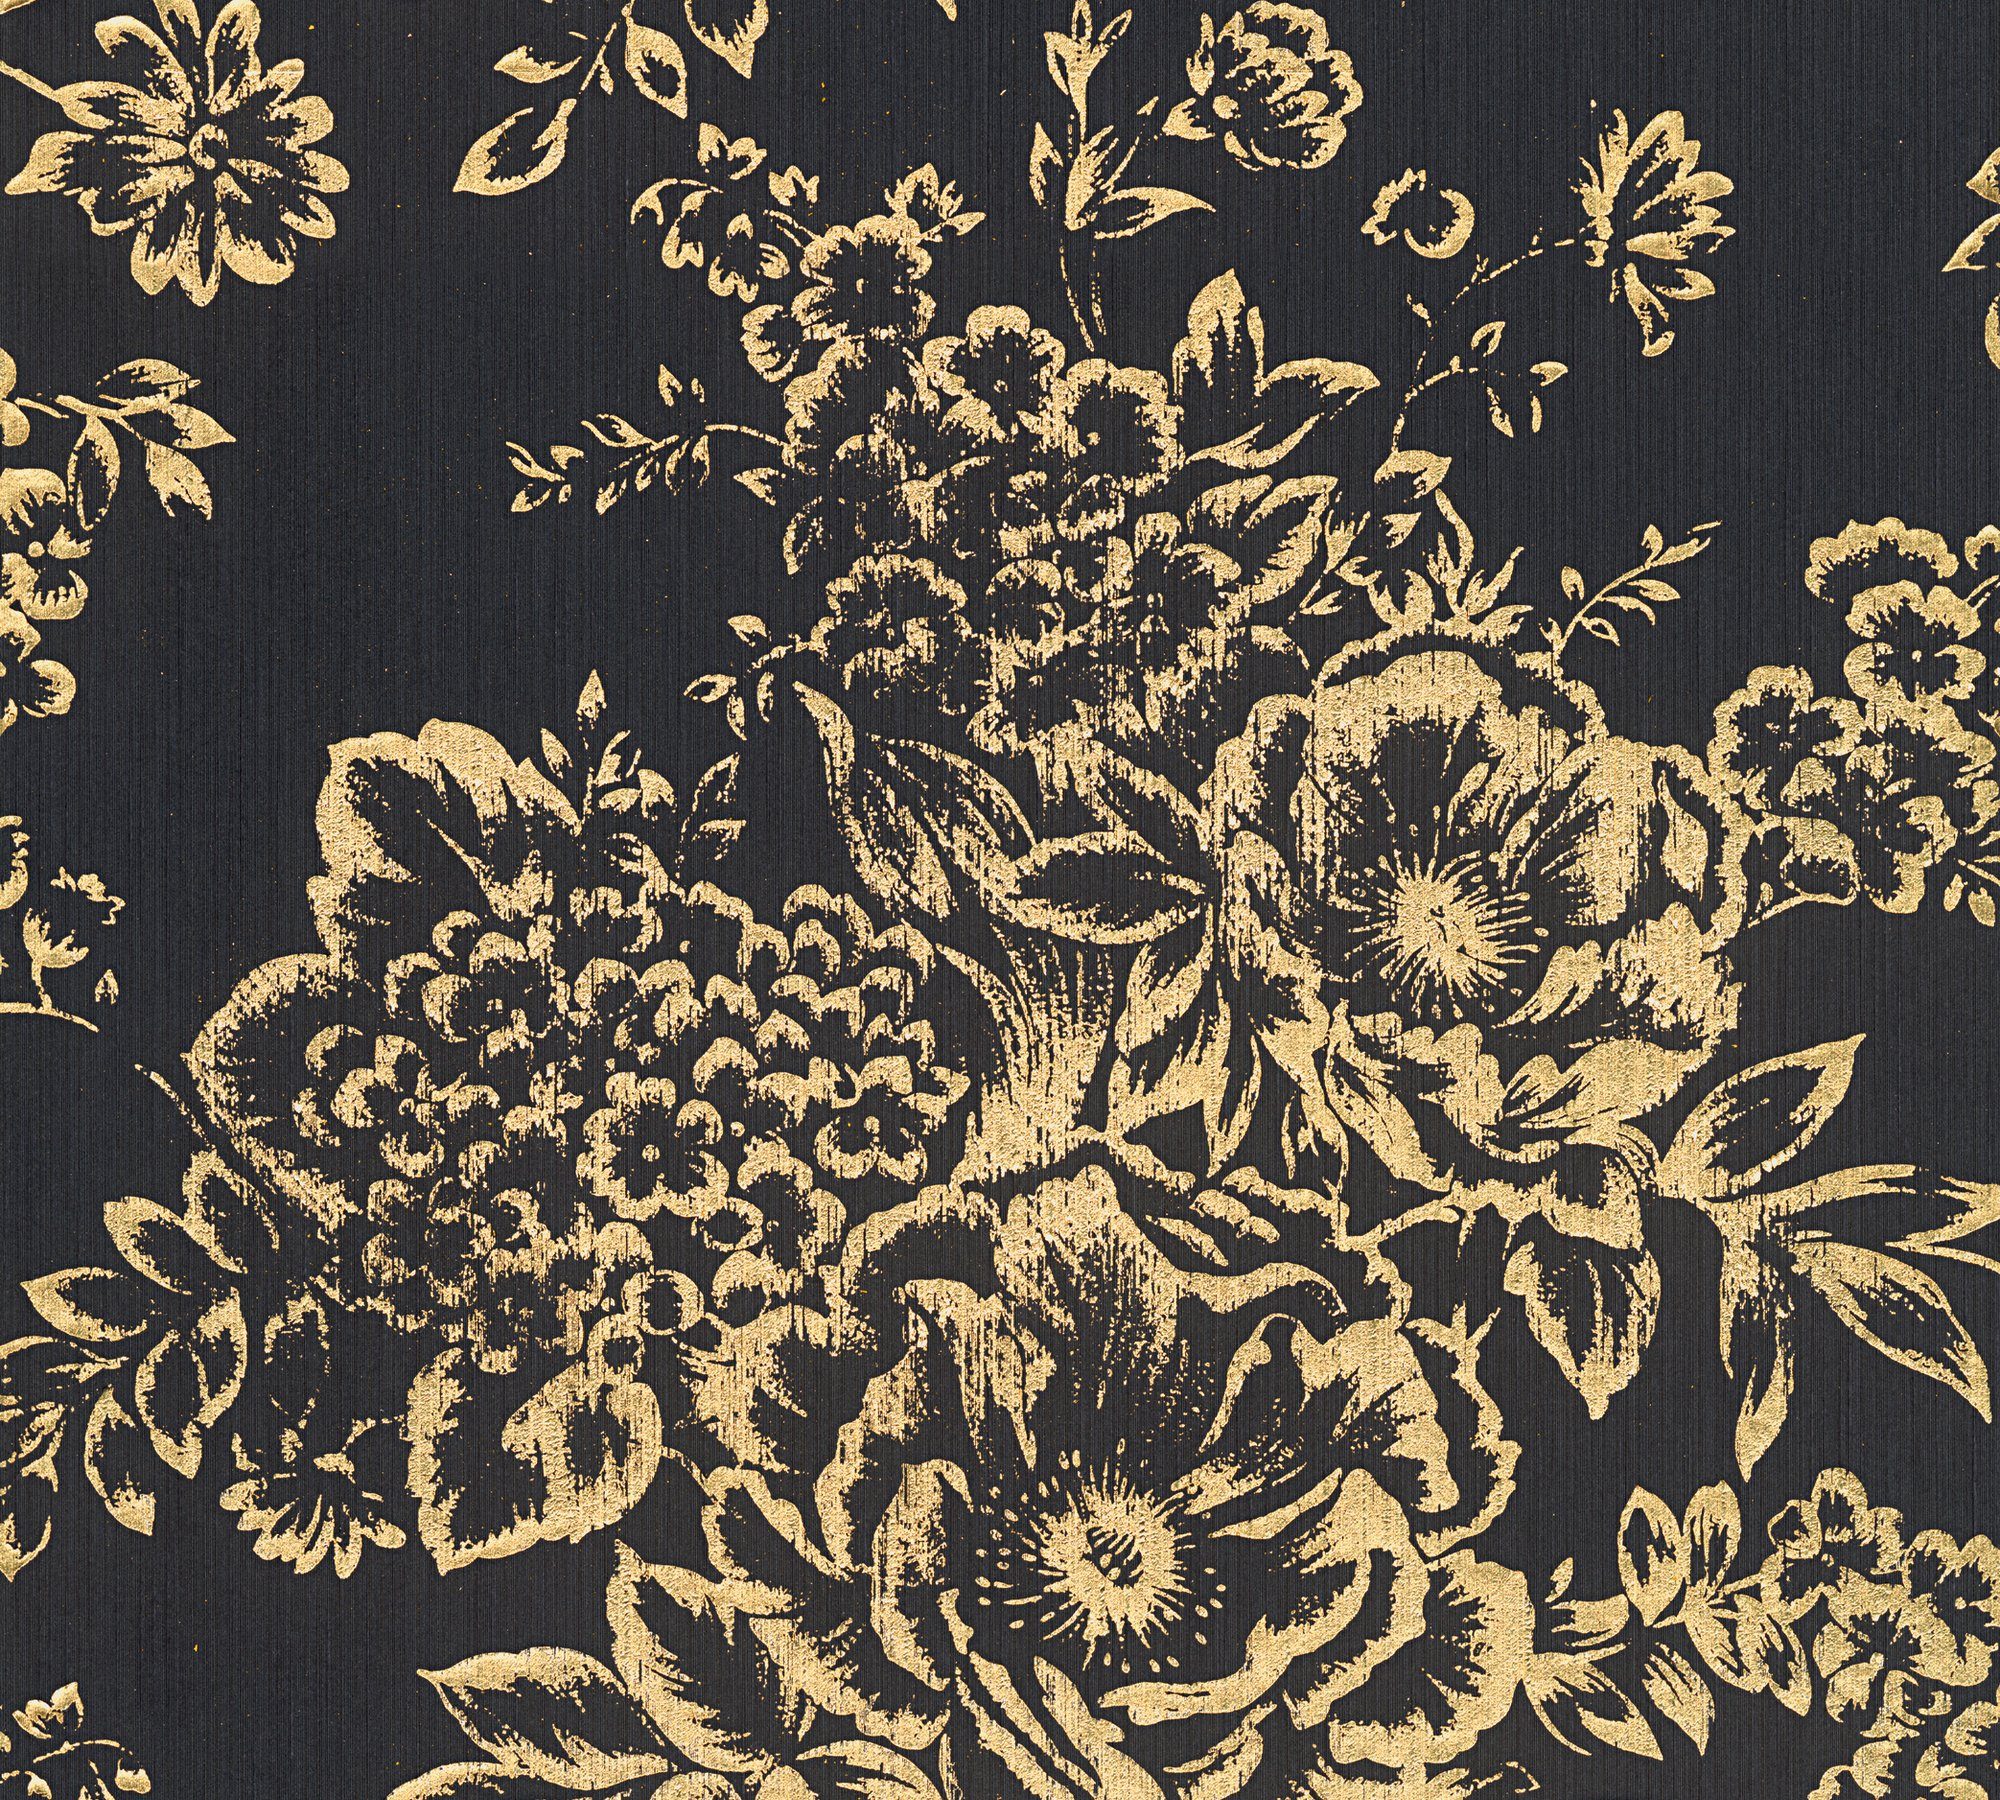 Barocktapete Silk, samtig, Architects Tapete Paper glänzend, A.S. gold/schwarz matt, Metallic Textiltapete Création Blumen floral,